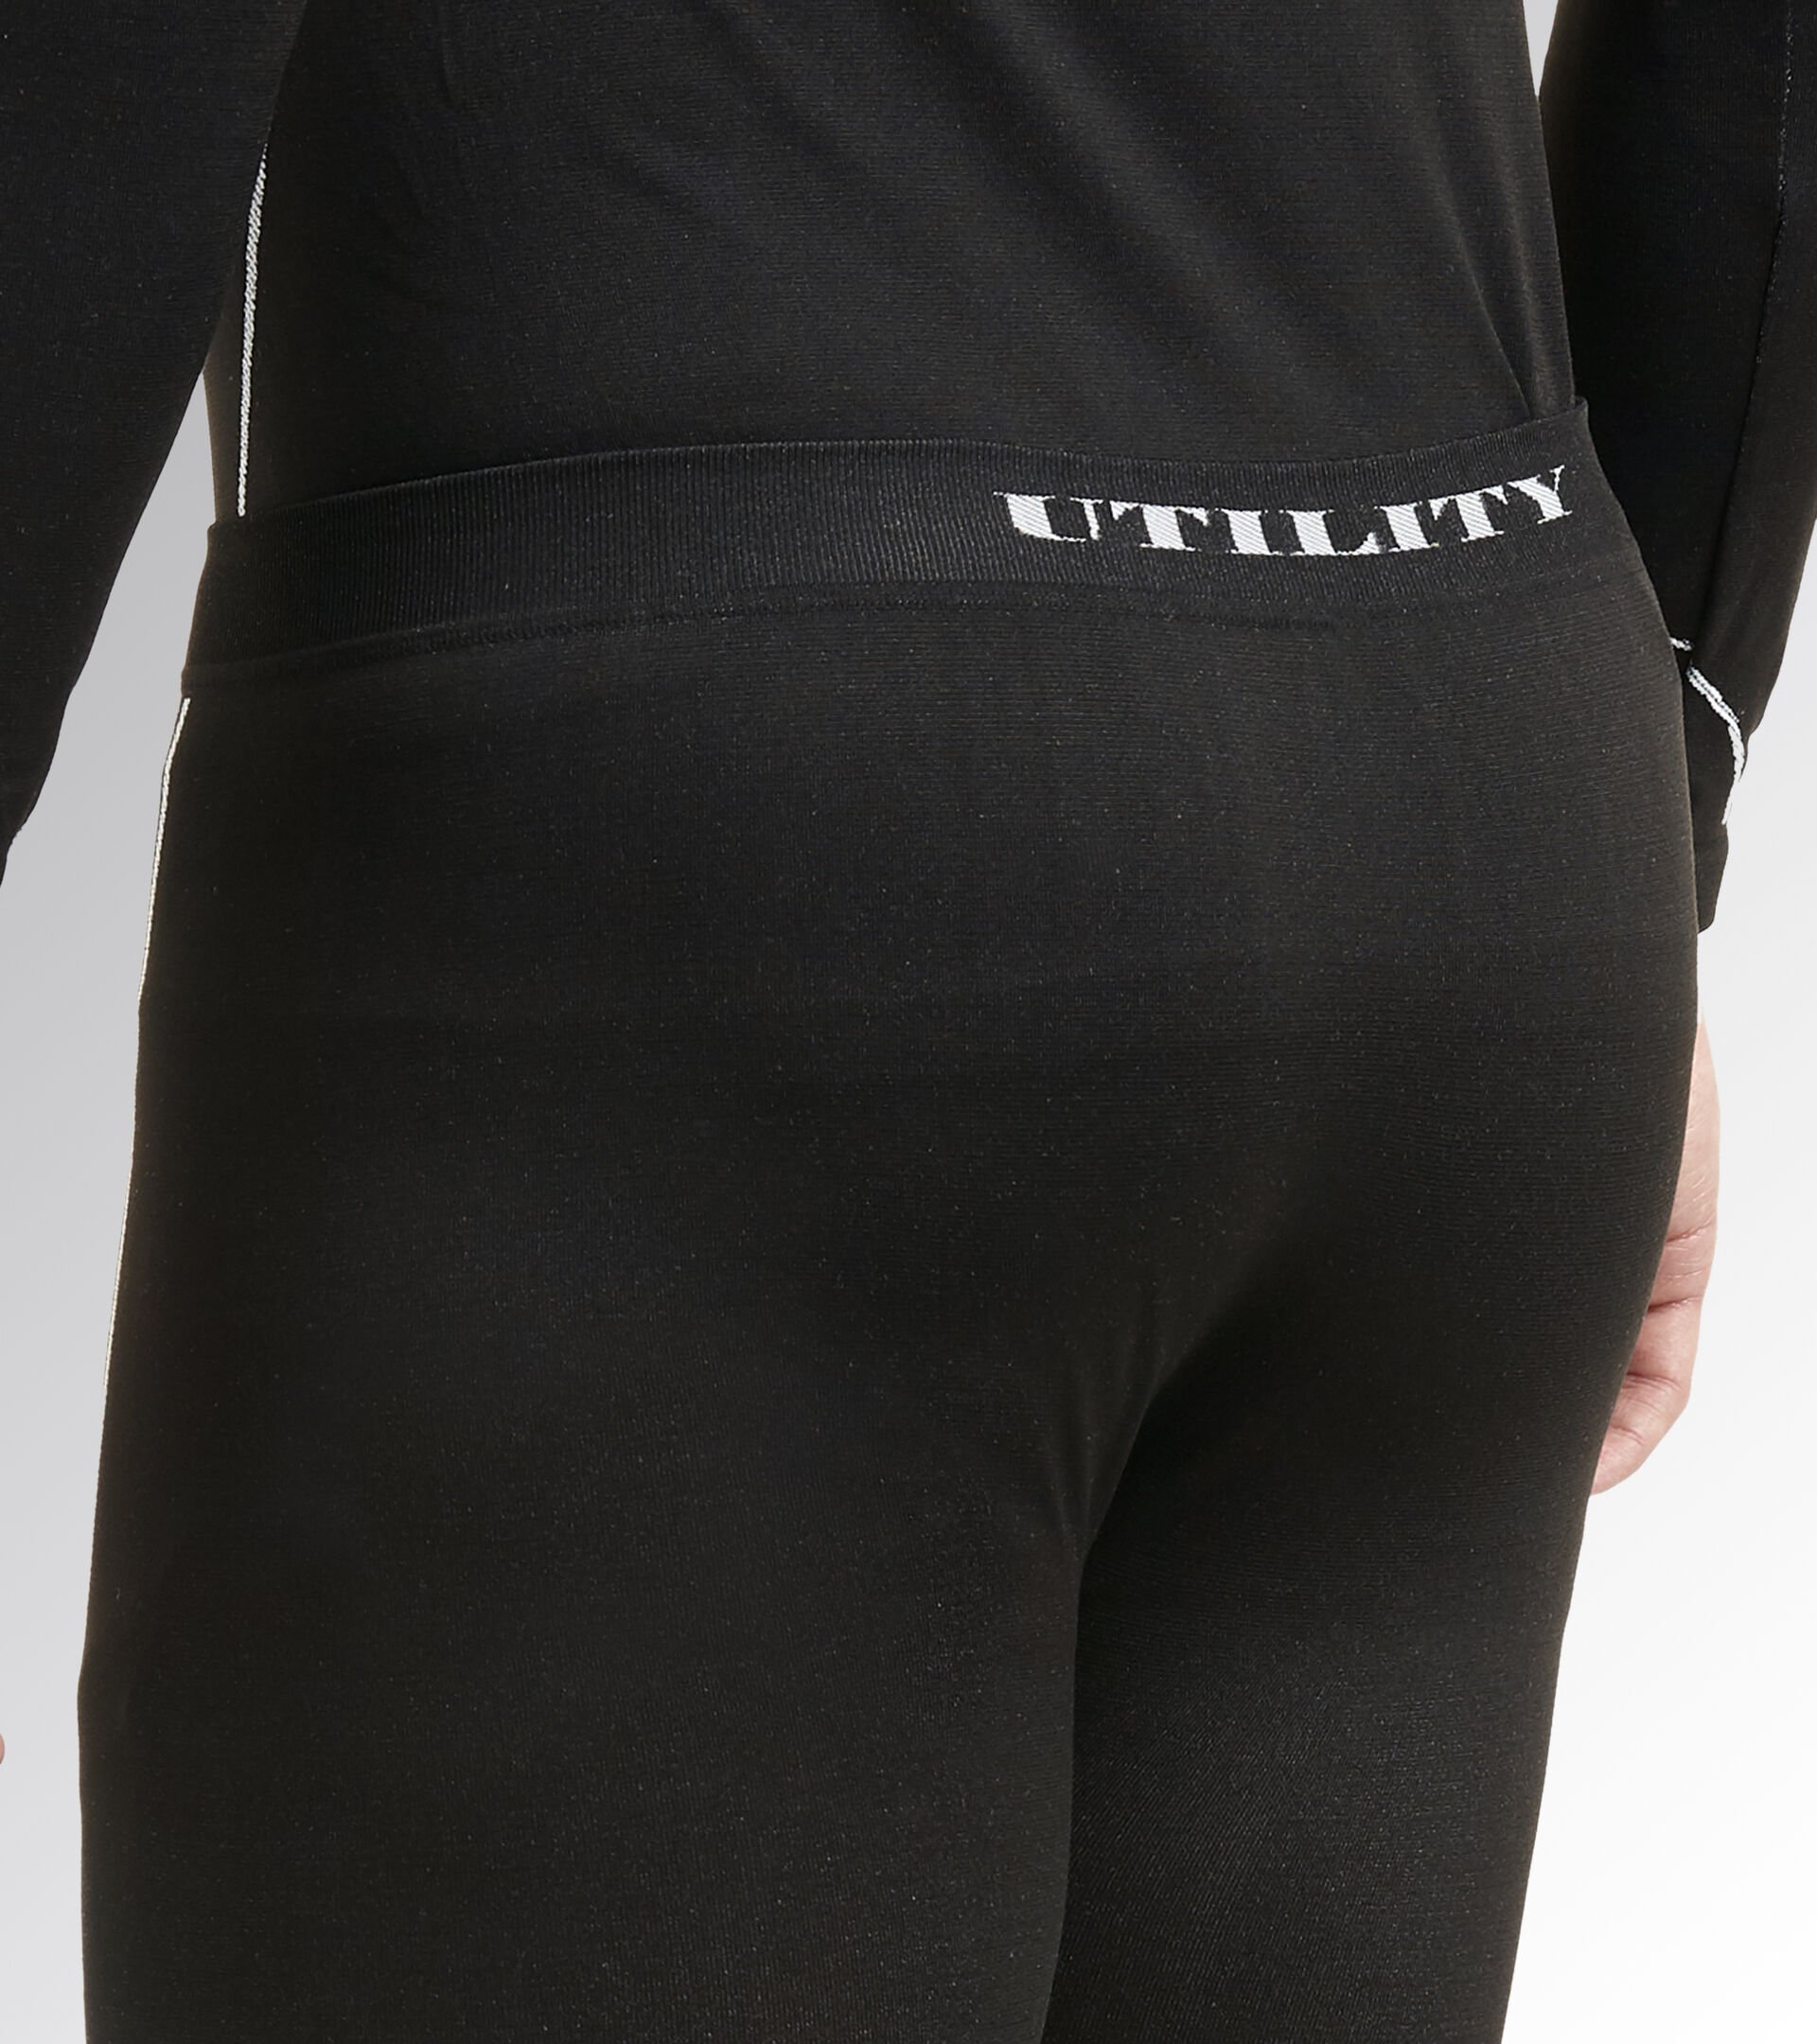 Underwear PANT SOUL BLACK - Utility